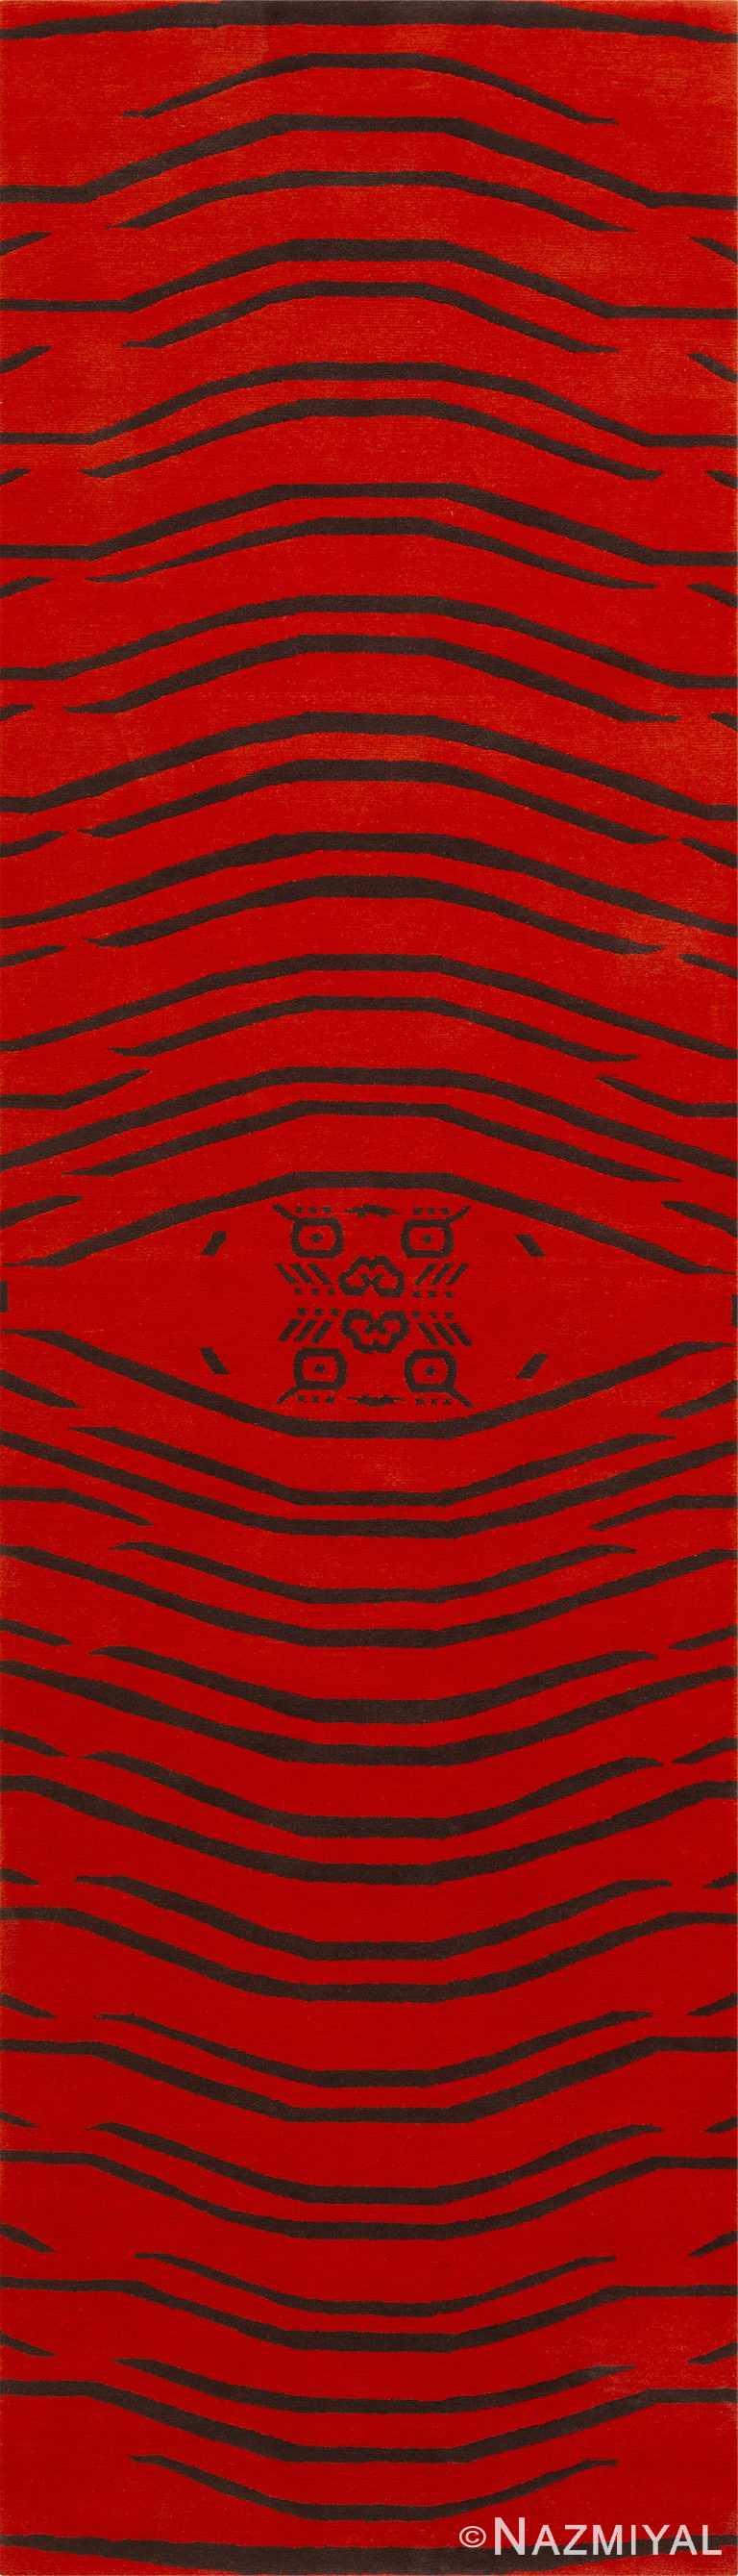 Artistic Red And Black Color Modern Tiger Design Hallway Runner Rug 61125 by Nazmiyal Antique Rugs